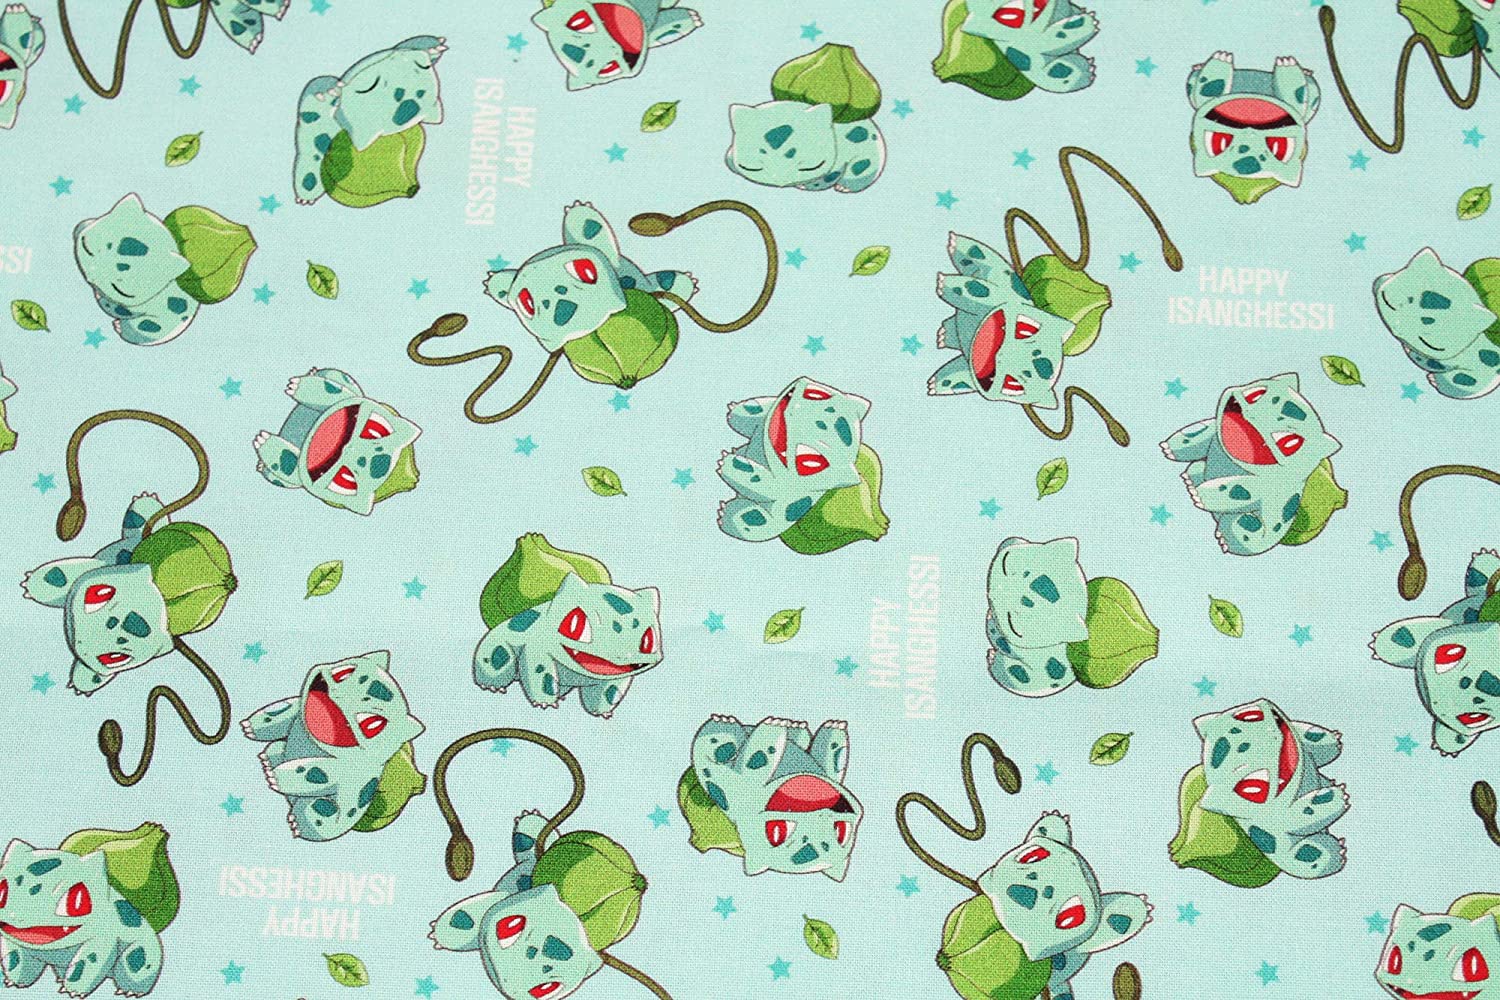 Character Fabric Pok-mon Bulbasaur 100% Cotton Sheeting Pocket Monster Pokemon 17.7 x 43.3 inches (45 x 110 cm)